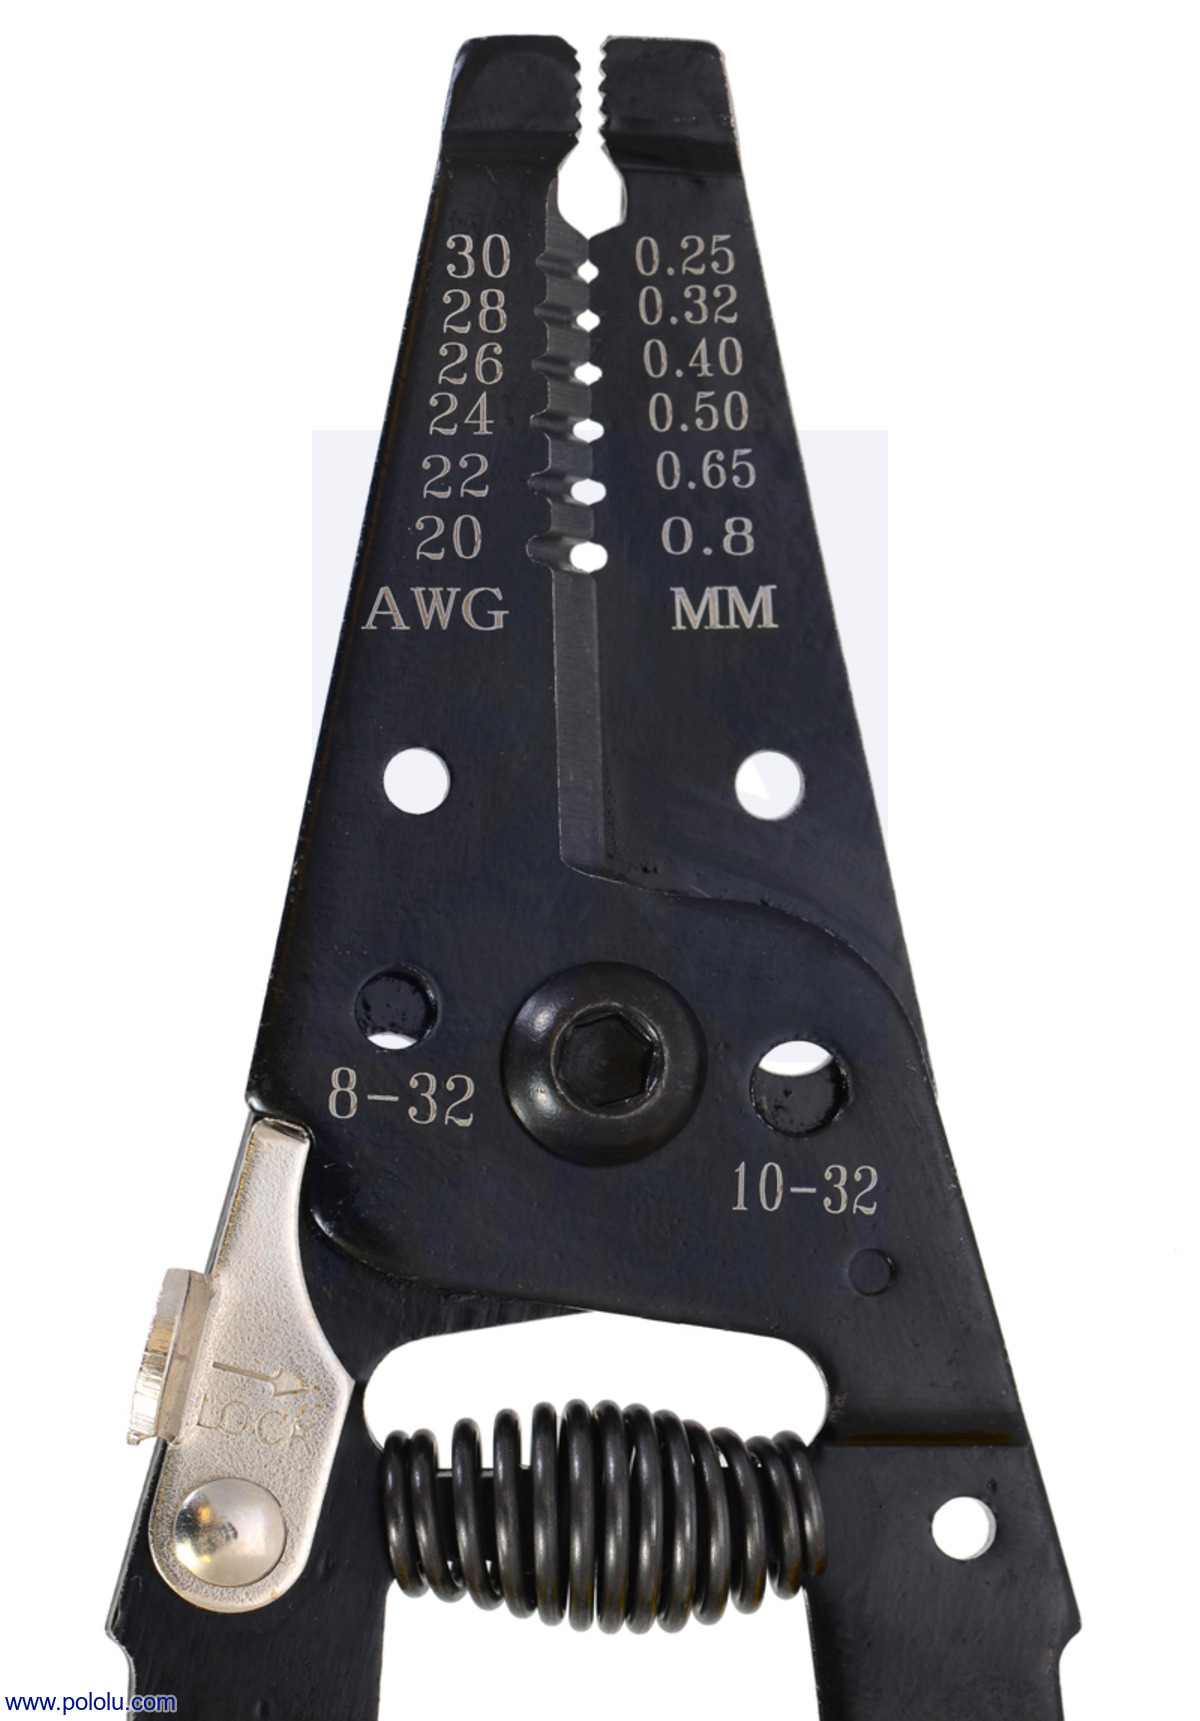 20-10 Gauge Maximum Cutting Capacity Hakko CHP CSP-30-2 Wire Stripper